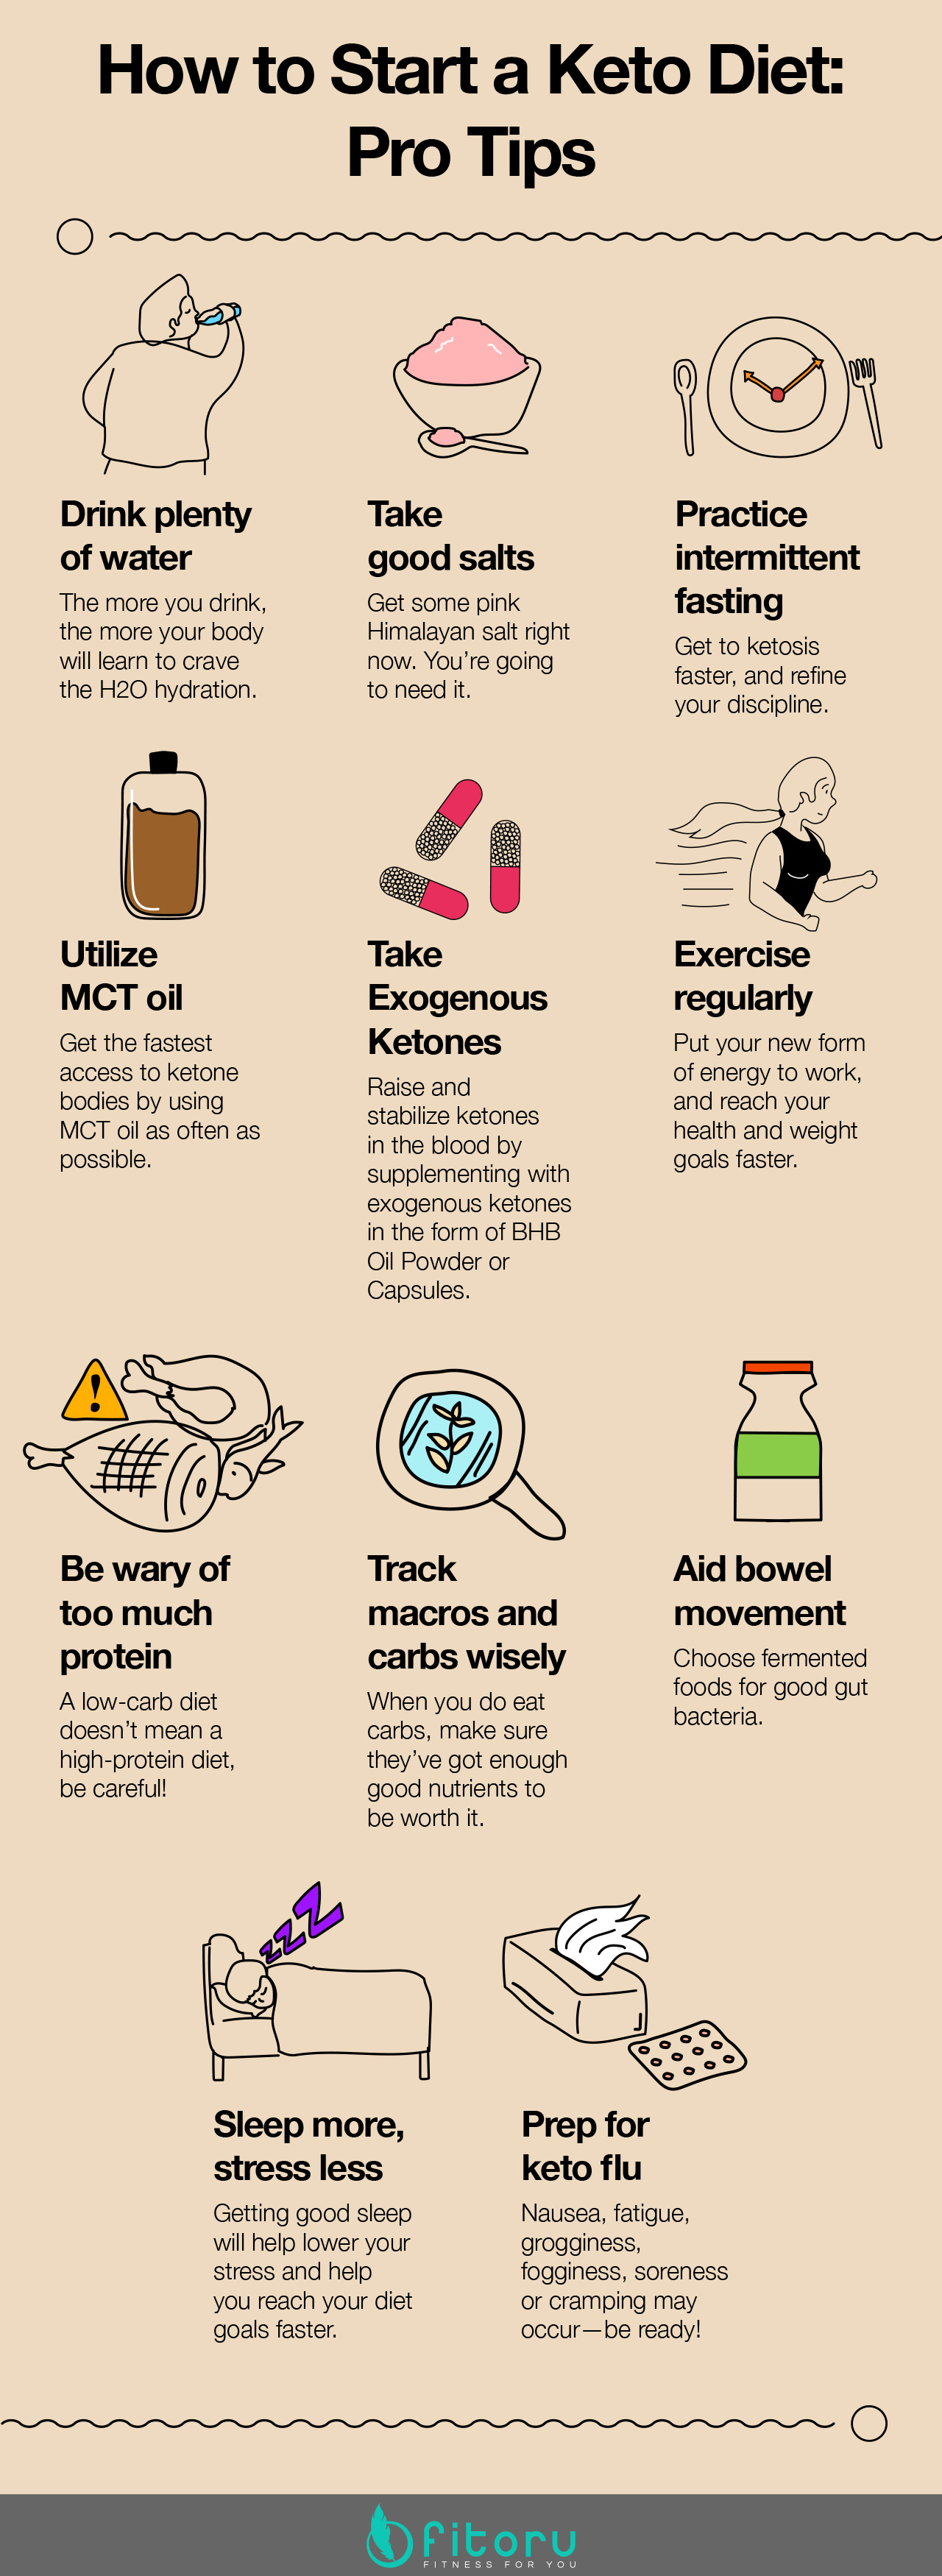 10 tips for starting a keto diet.